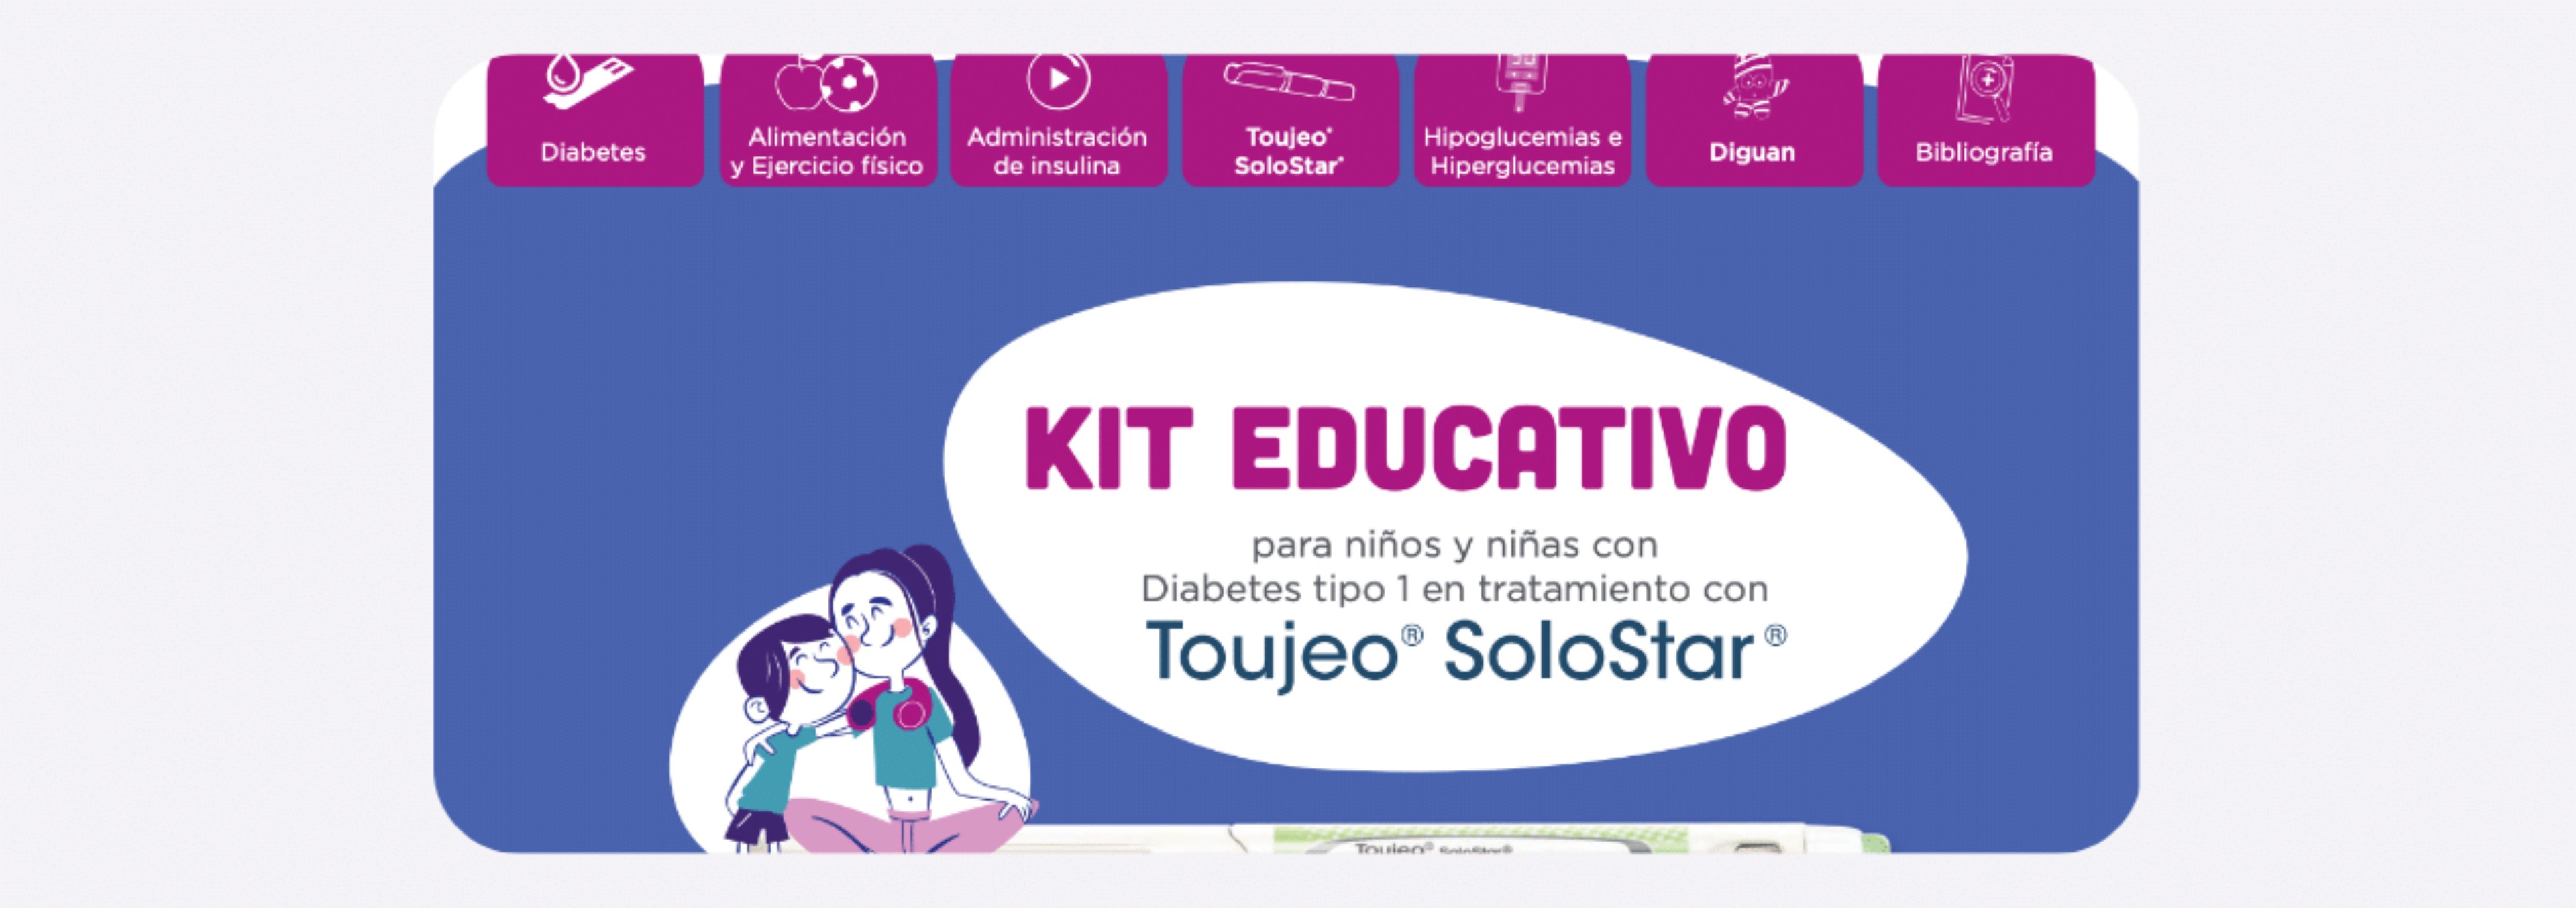 Kit educativo para personas con diabetes tipo 1 en tratamiento con Toujeo® DoubleStar®